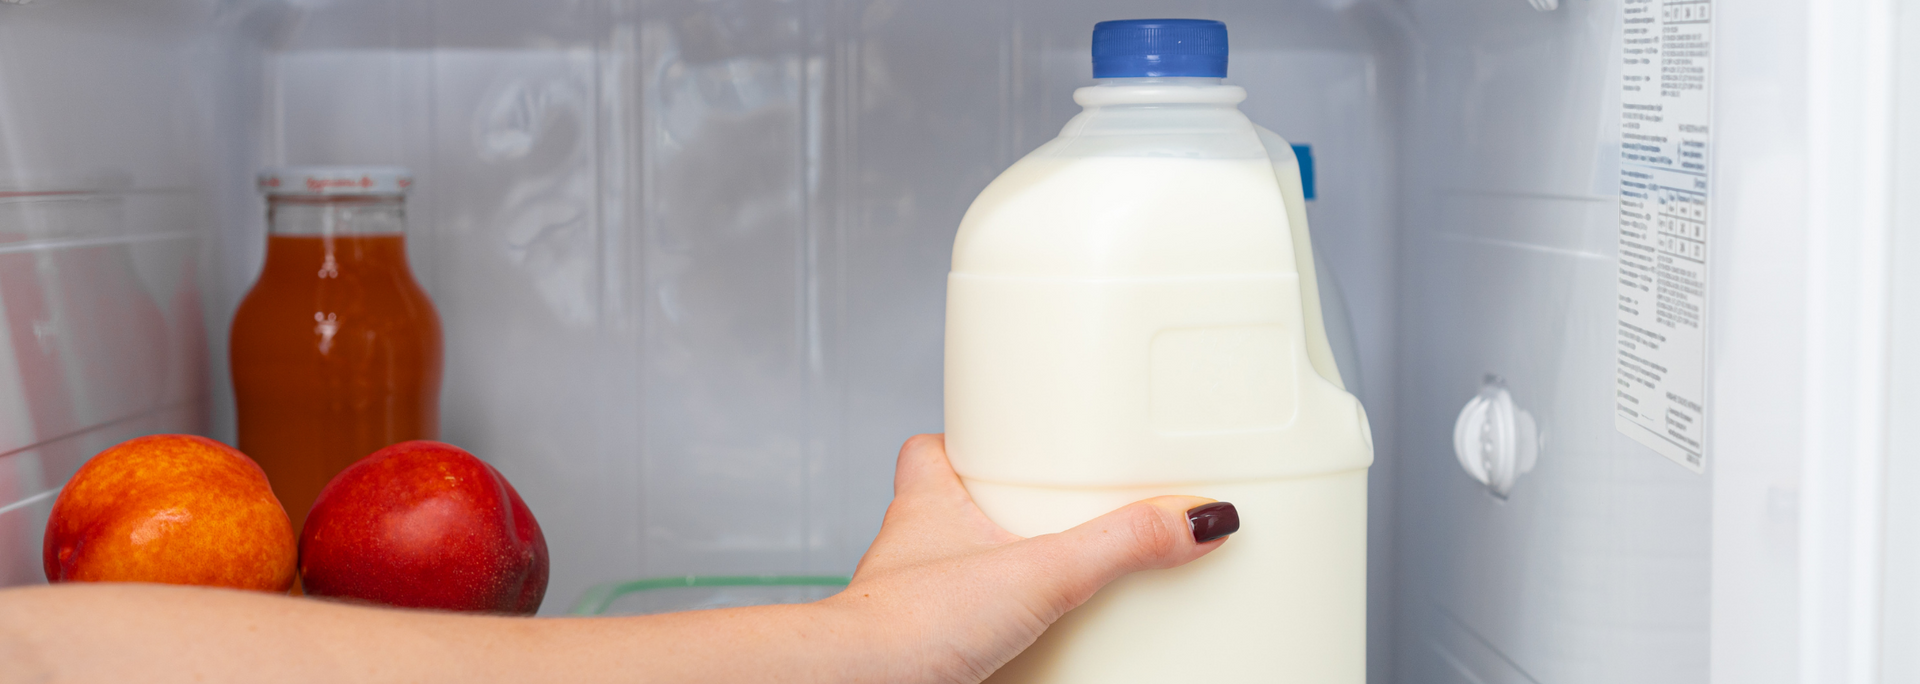 Picture of milk in a fridge